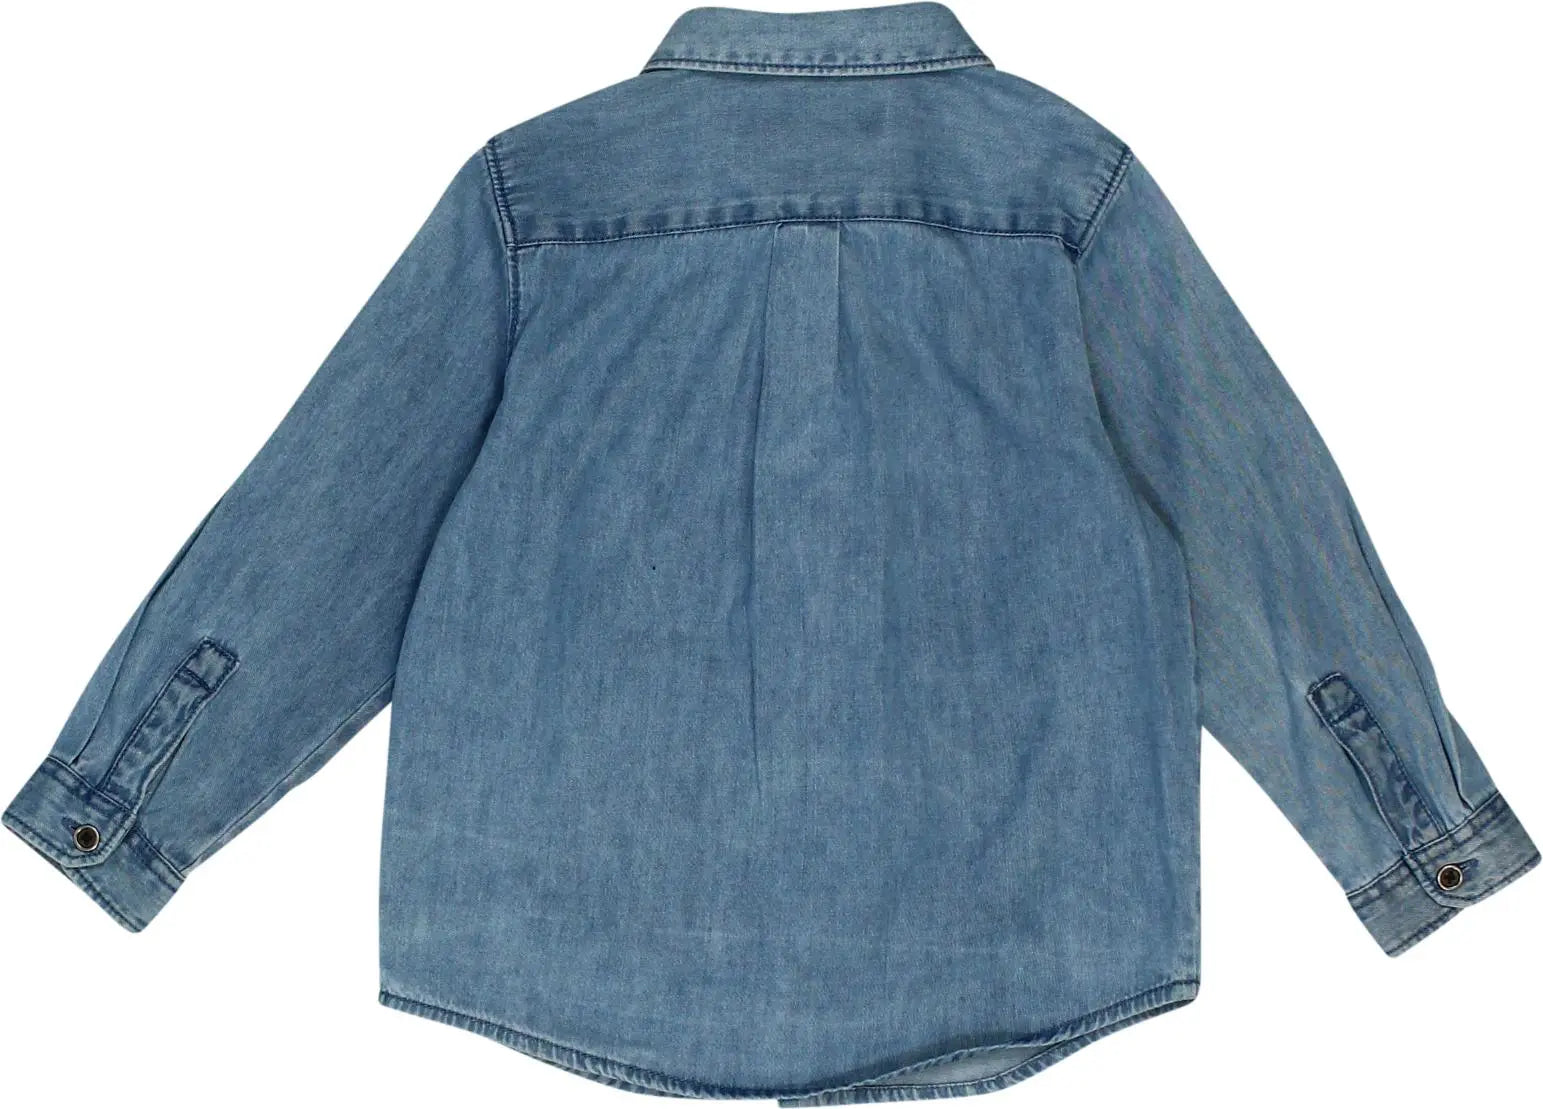 Zara - Denim Shirt- ThriftTale.com - Vintage and second handclothing